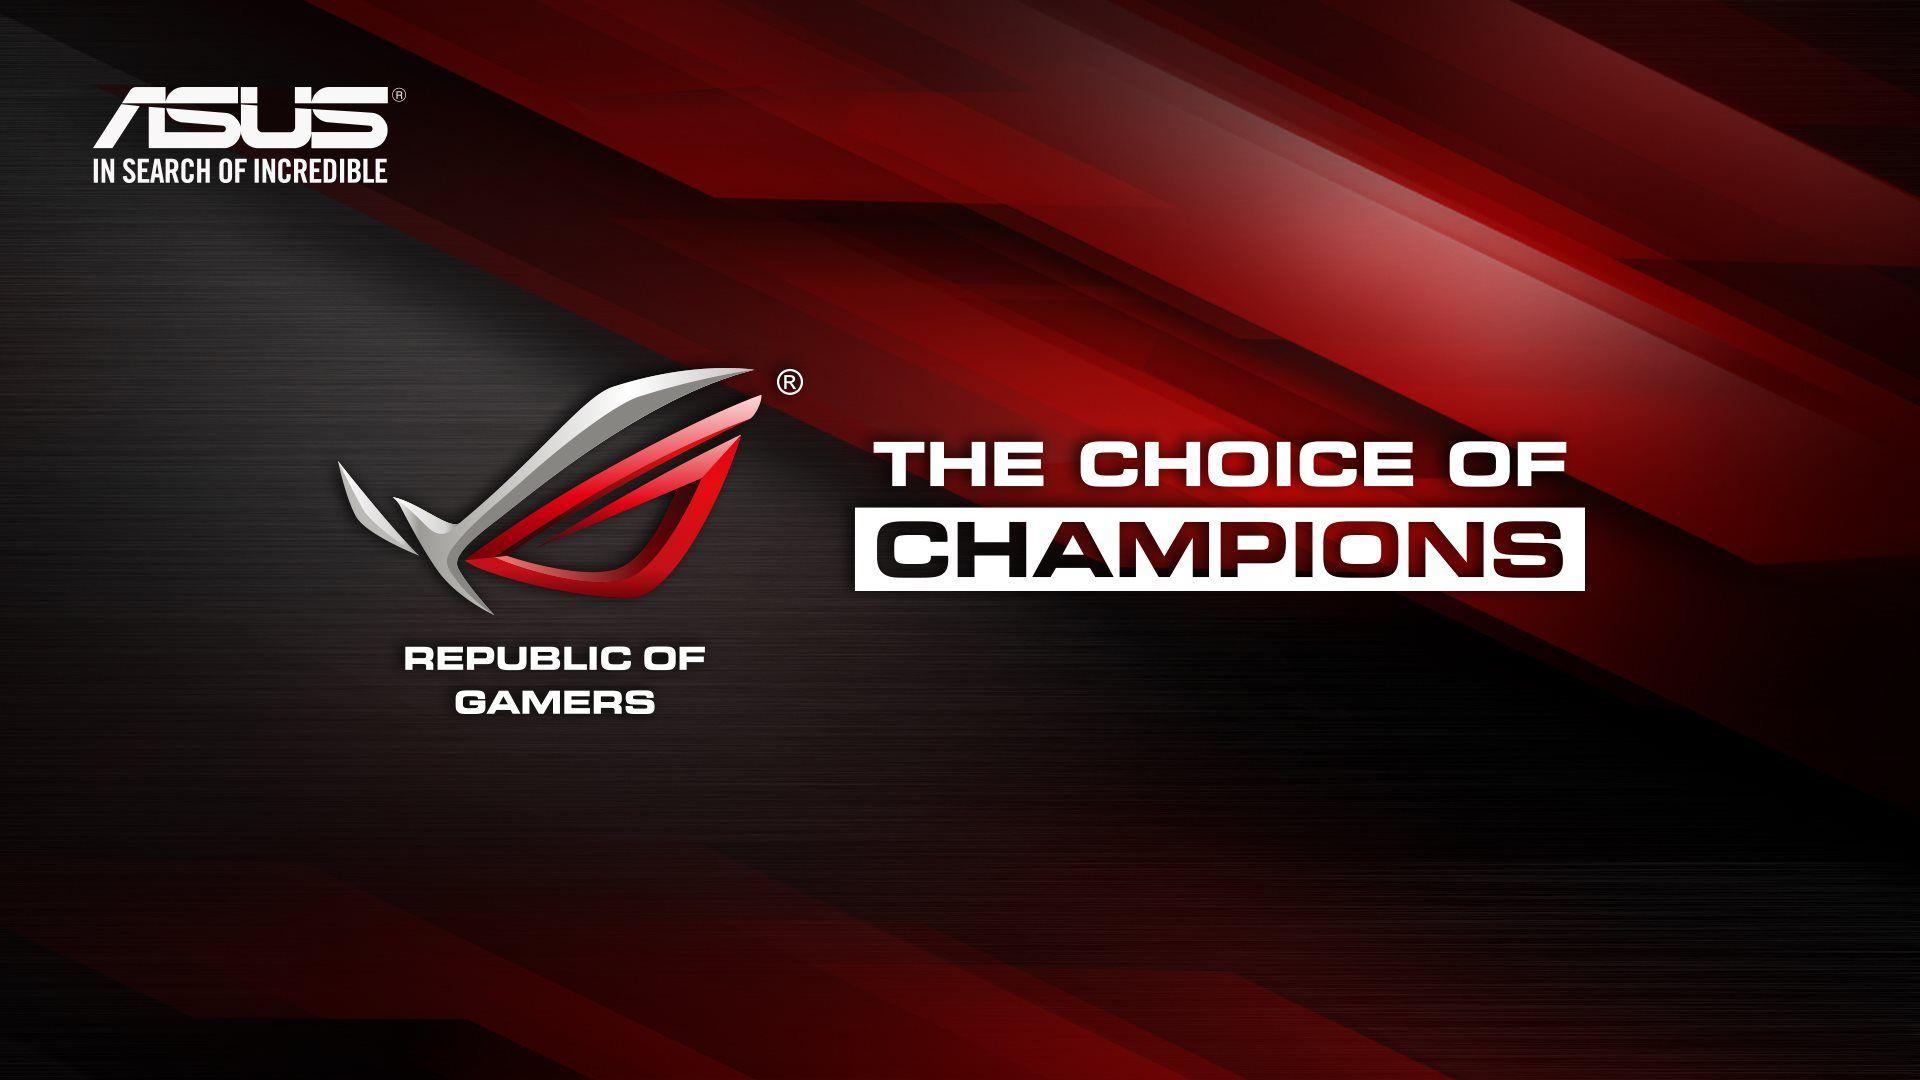 Asus The Choice Of Champions Rog. Bilder, Hintergrundbilder